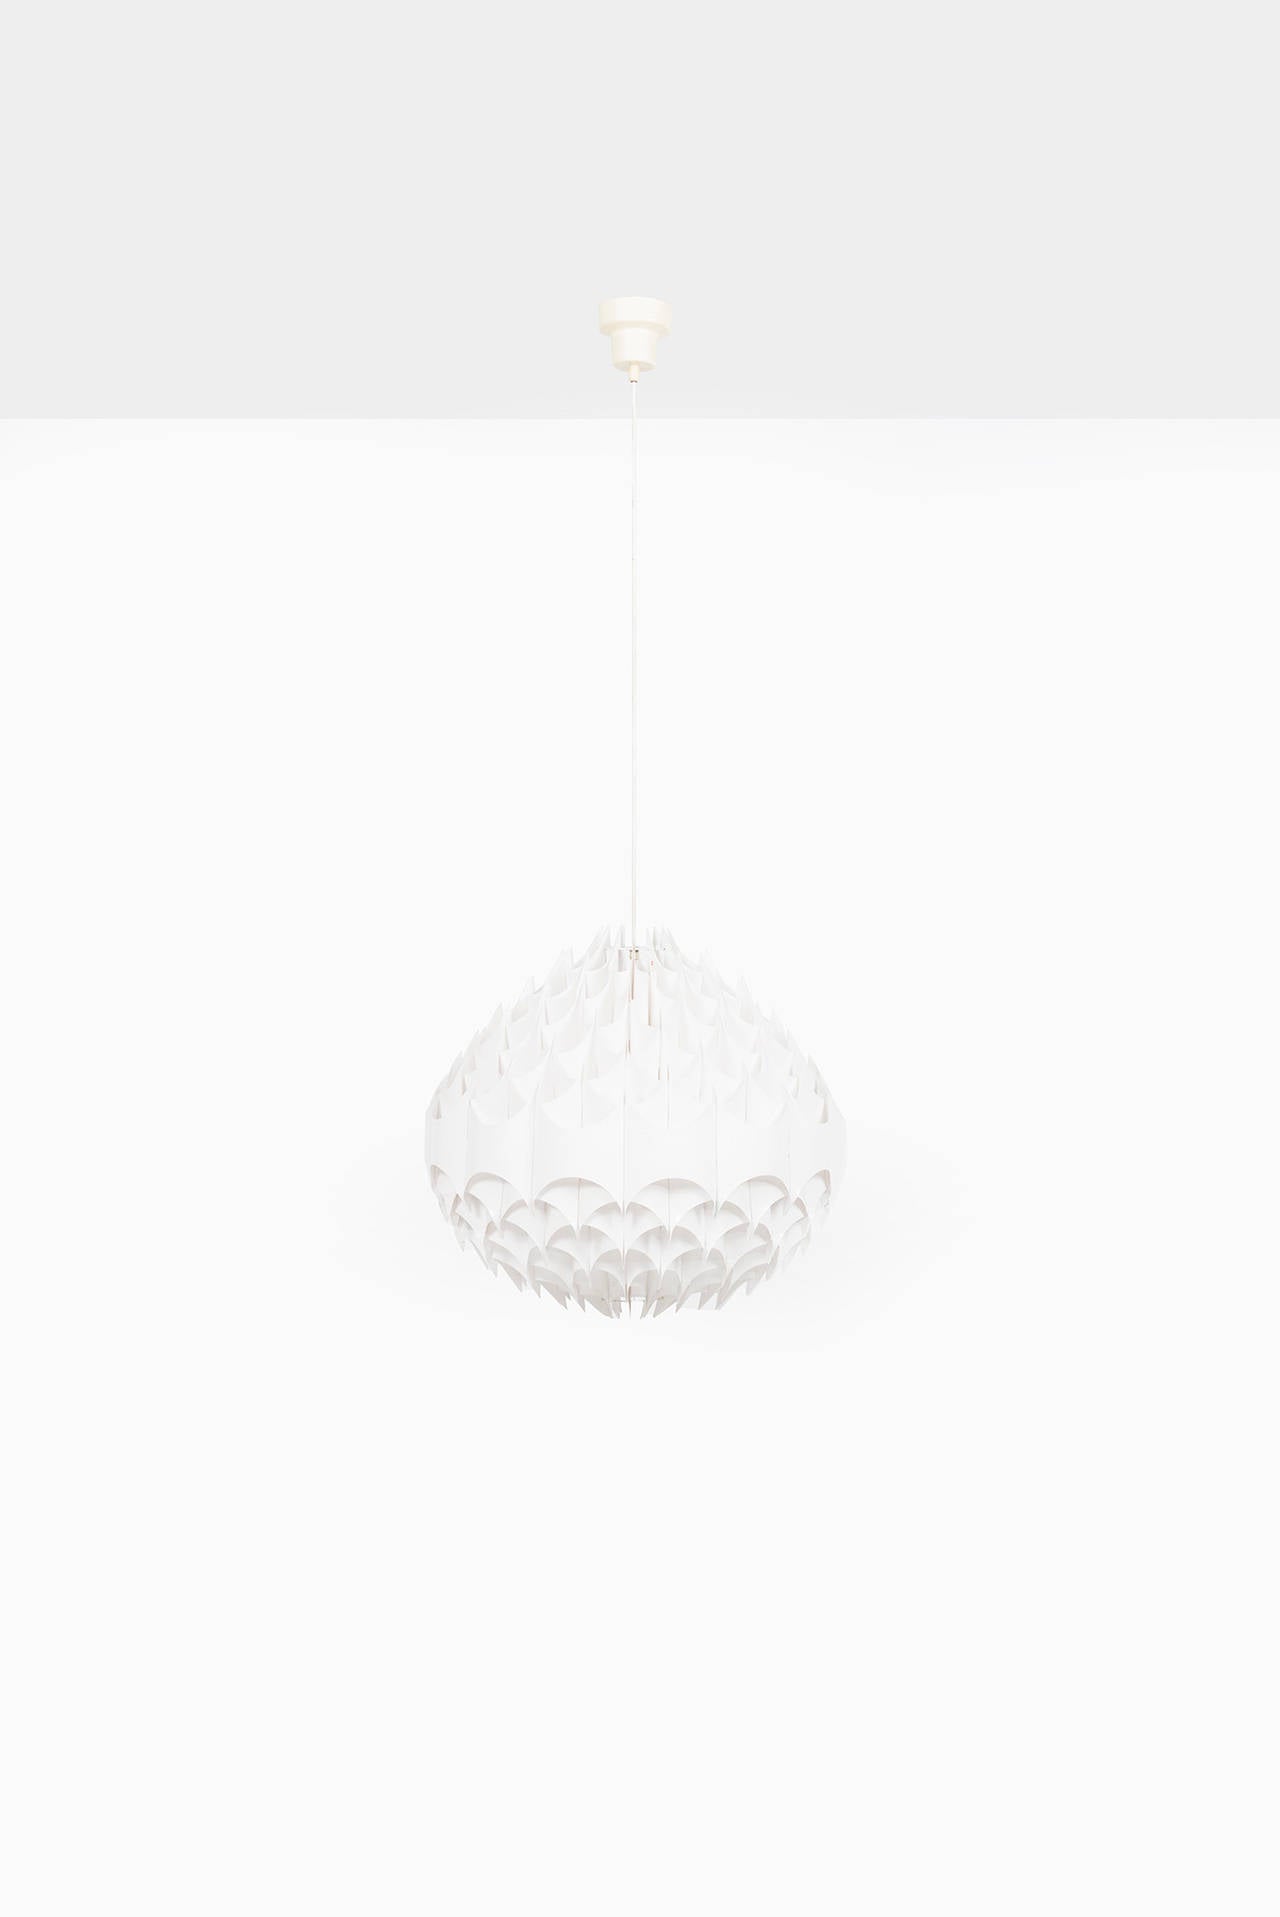 Rare ceiling lamp model Rhythmic designed by Havlova Milanda. Produced by Vest Leuchten in Austria.